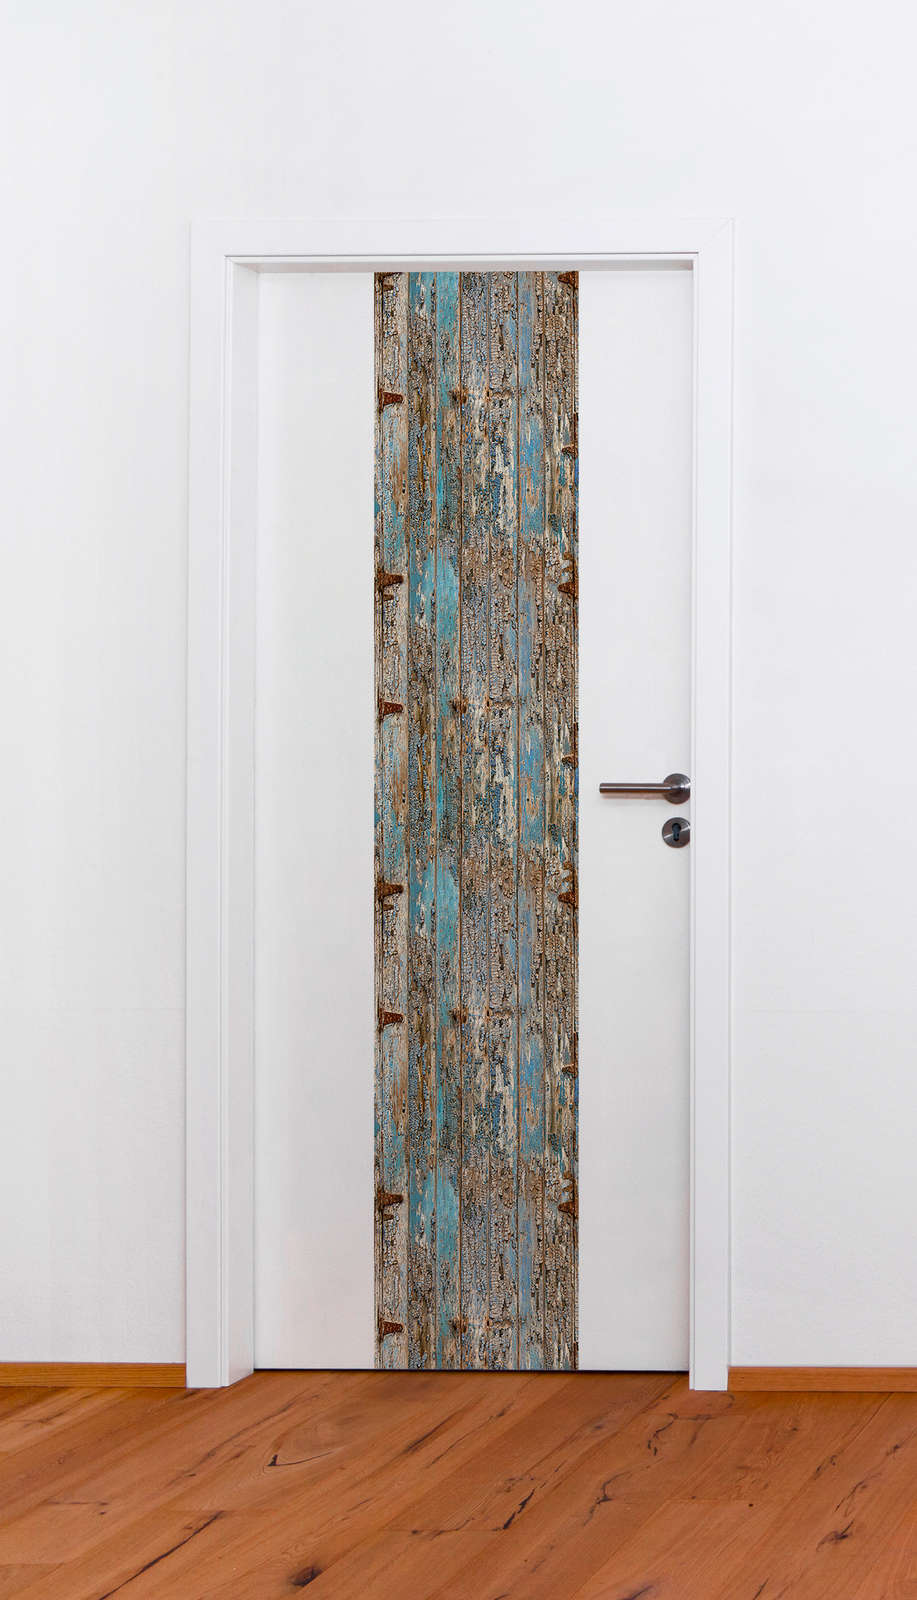             Motif wallpaper wooden boards in used look, Shabby Chic style - blue, beige, grey
        